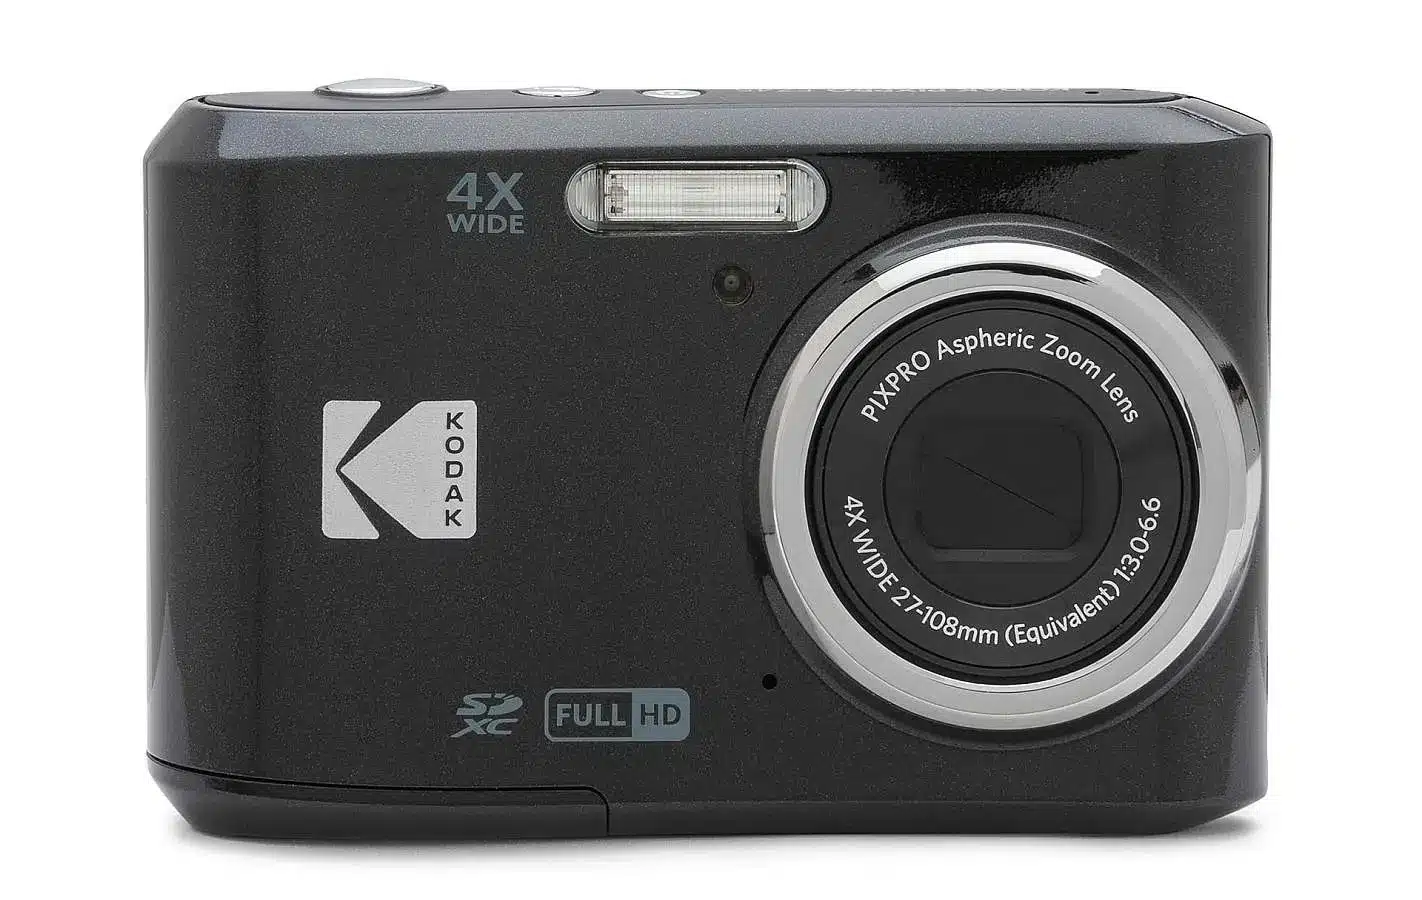 2023 Kodak Pixpro FZ45 Digital Camera Review + DIGICAM settings and menu  overview + Sample Pics 